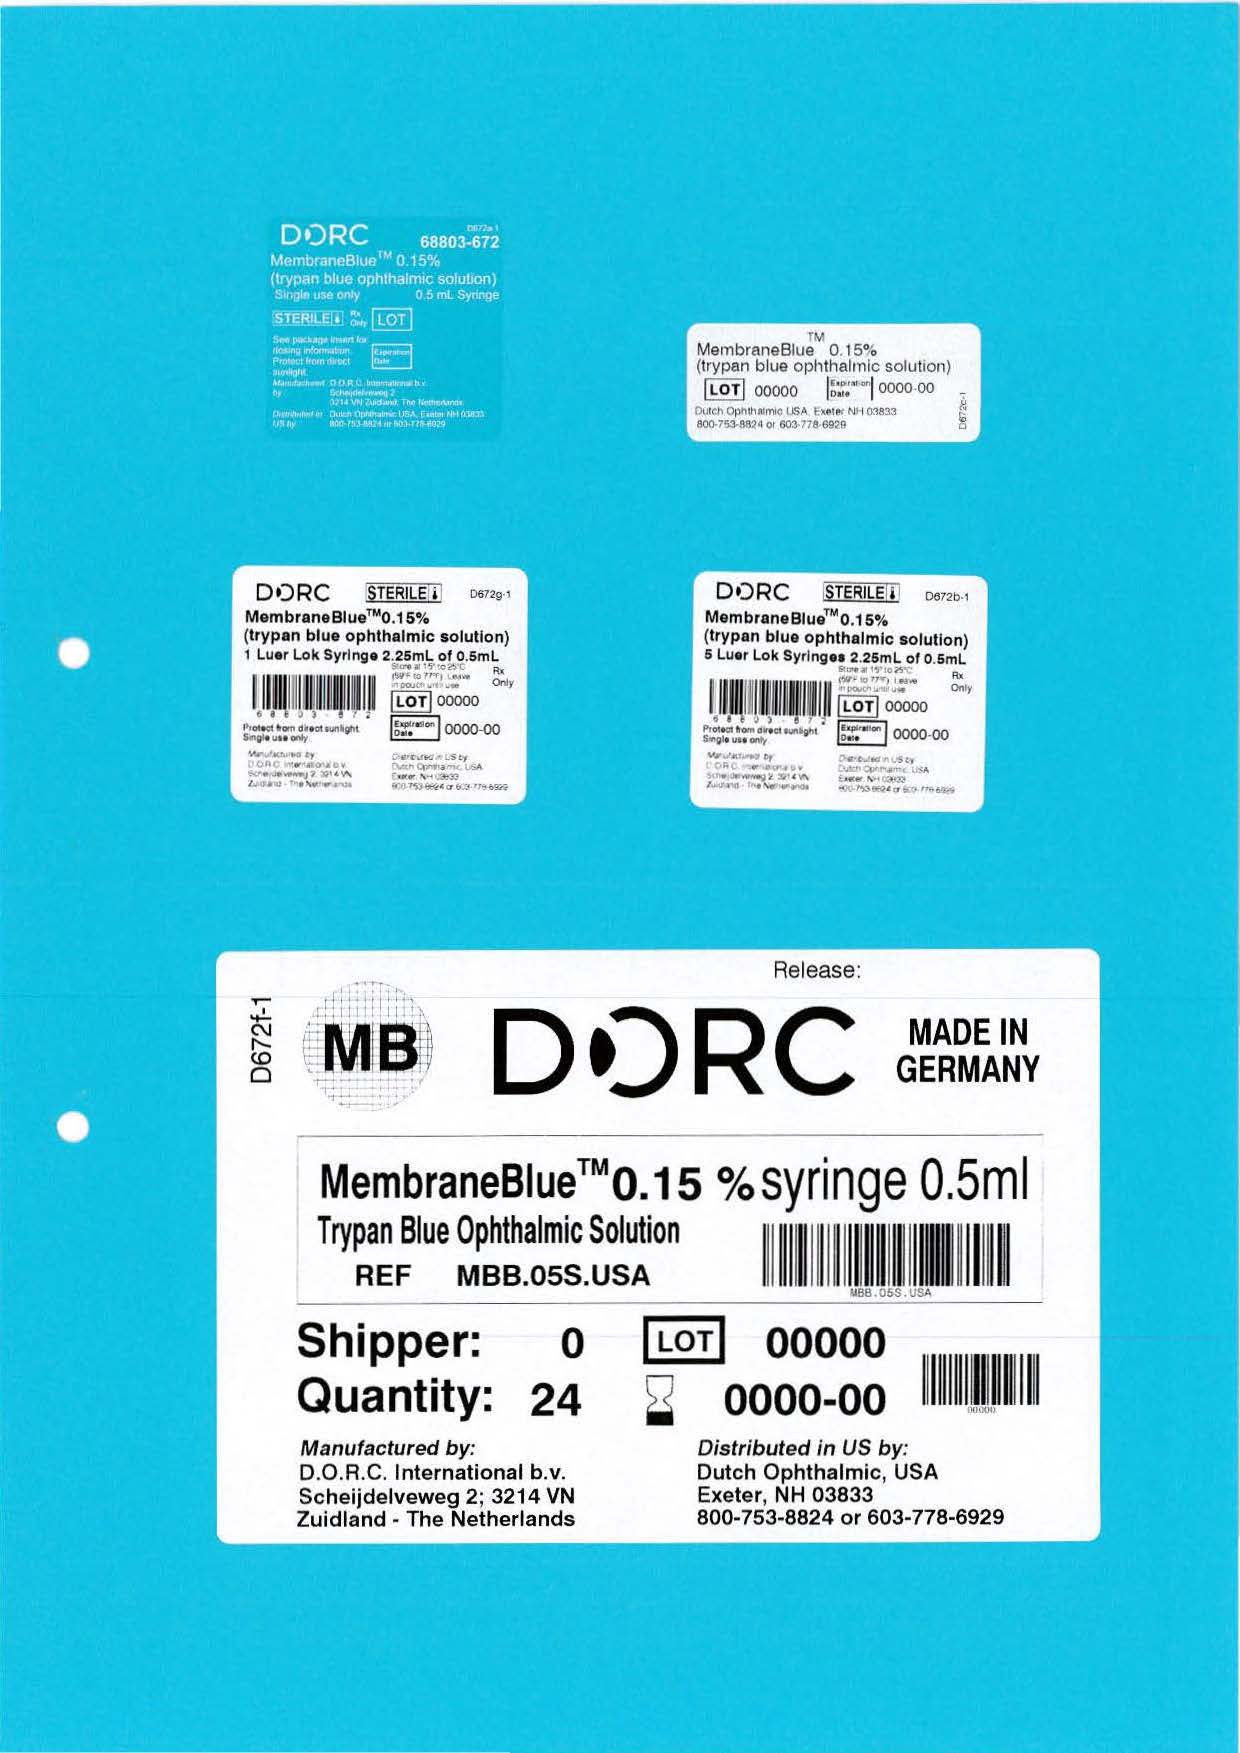 MembraneBlue - labelling